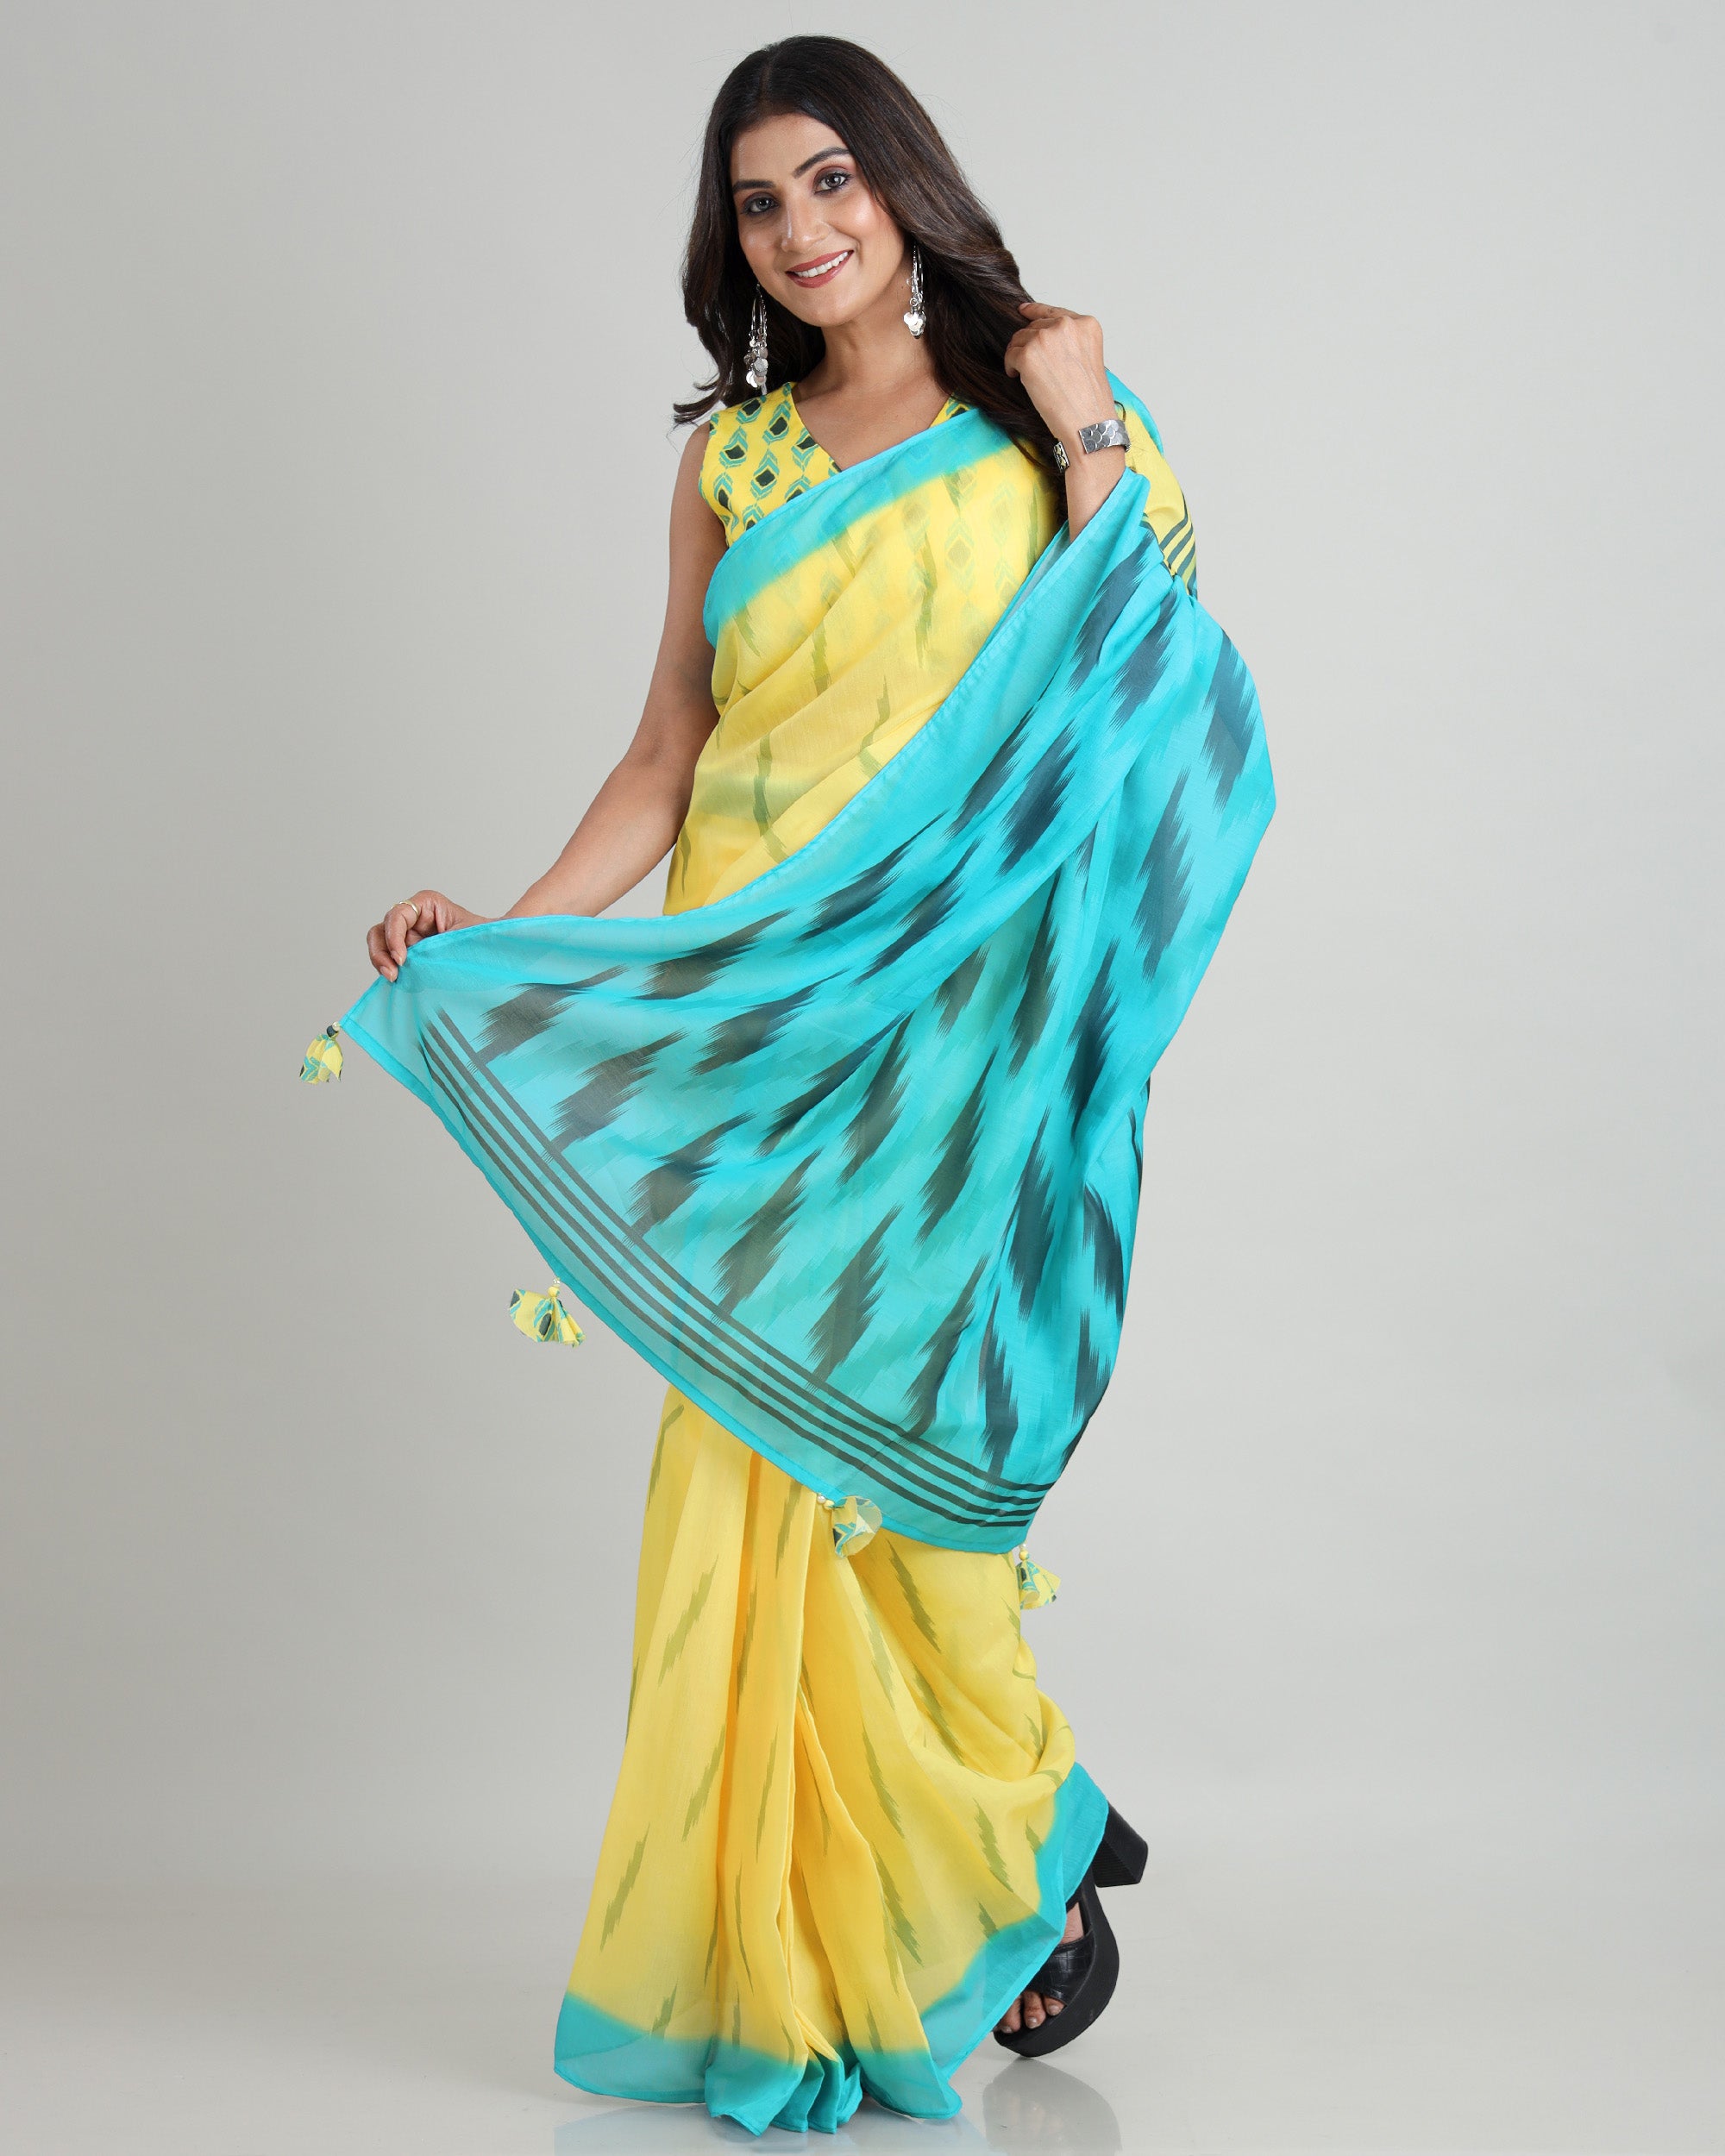 Rashmi Gautam in Mugdha Art Studio – South India Fashion | Indian gowns  dresses, Long dress design, Indian gowns